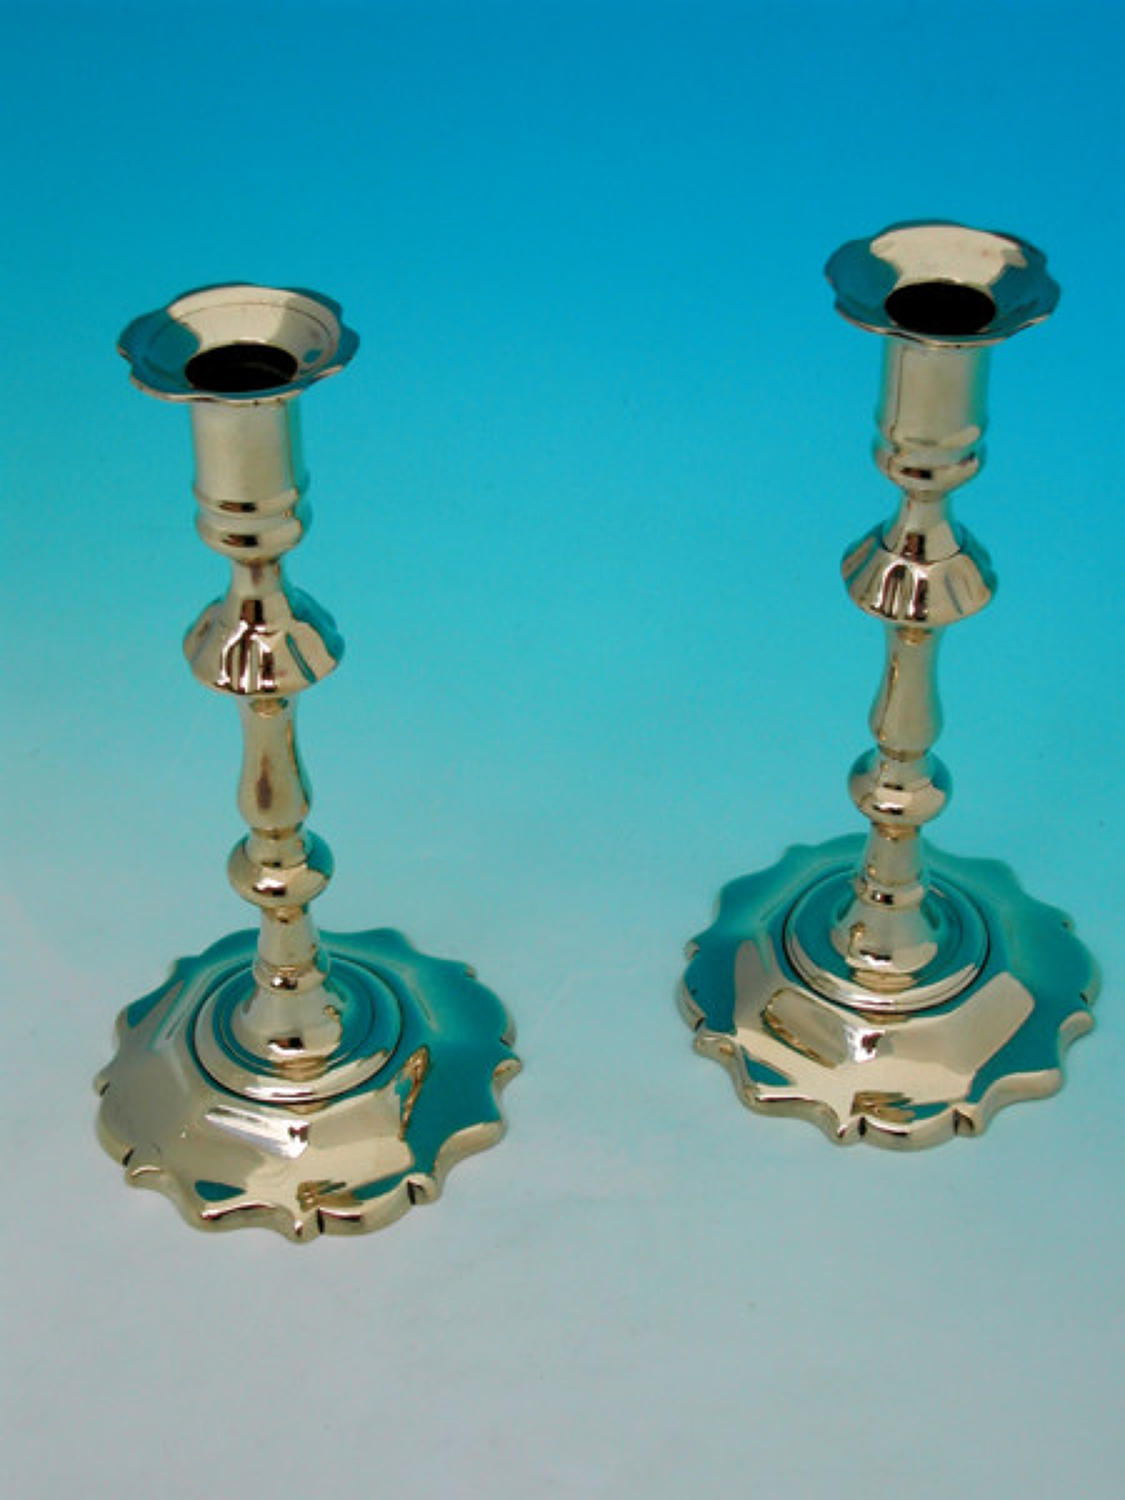 A pair of 18thc Brass Petalbase Candlesticks. English C1745 - 65